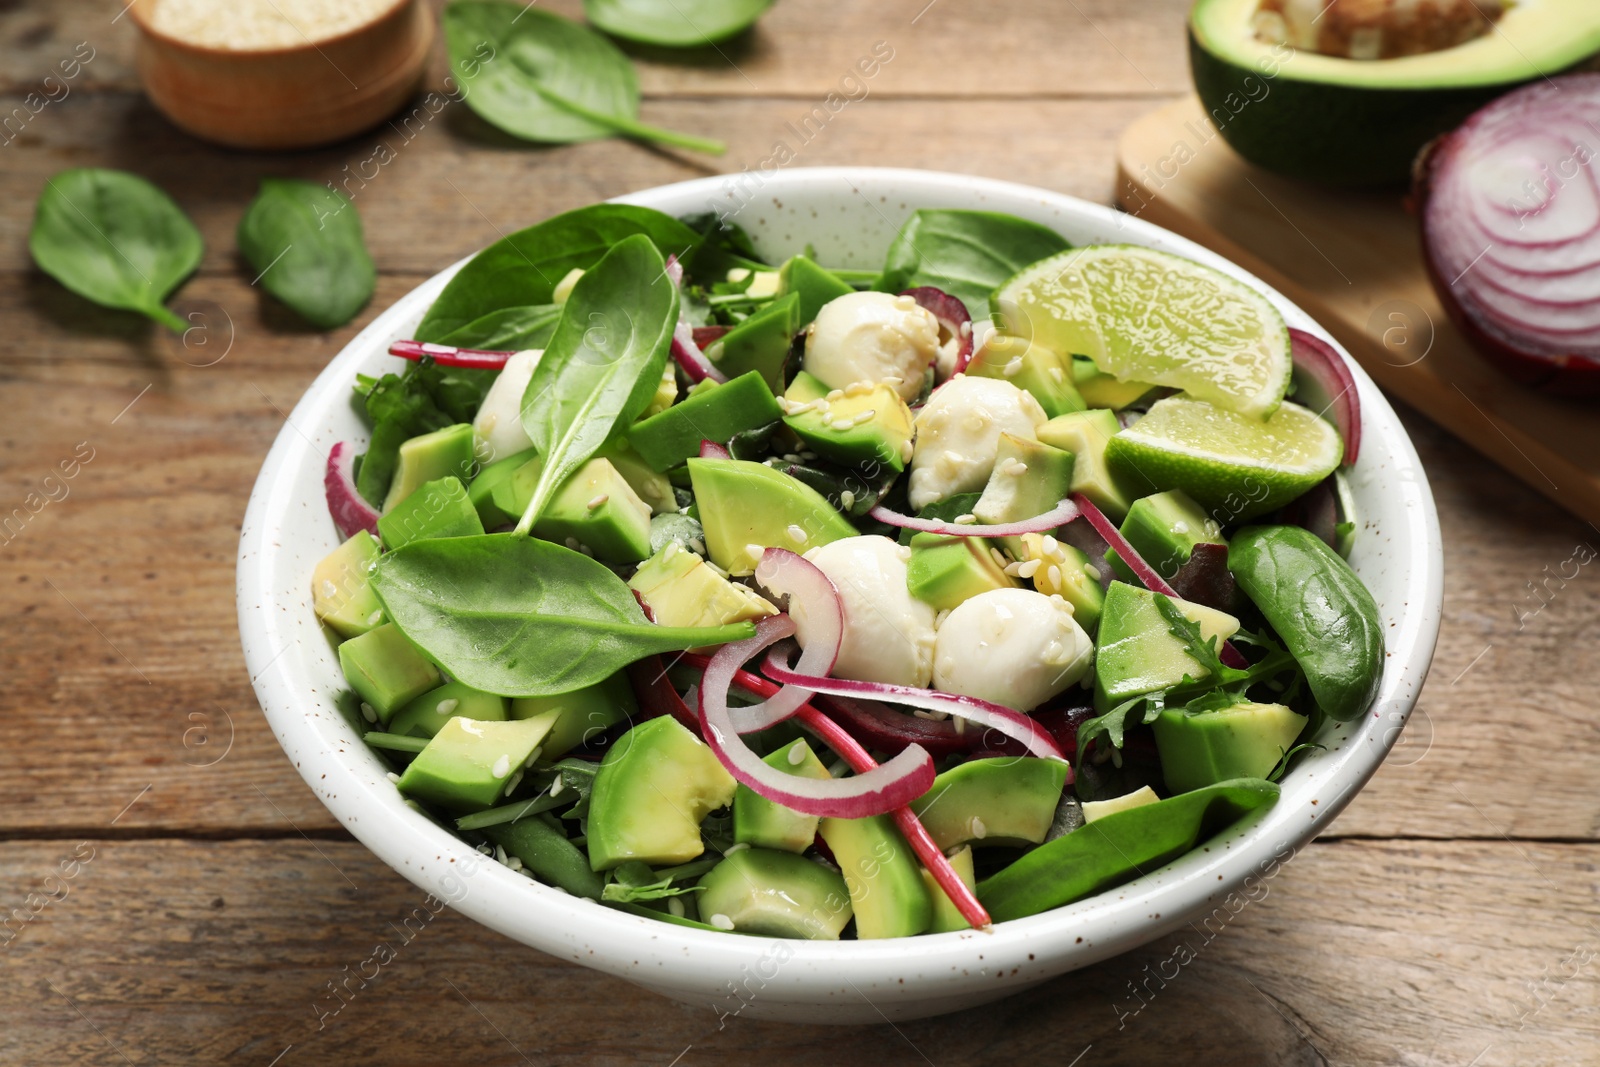 Photo of Delicious avocado salad with mozzarella on wooden table